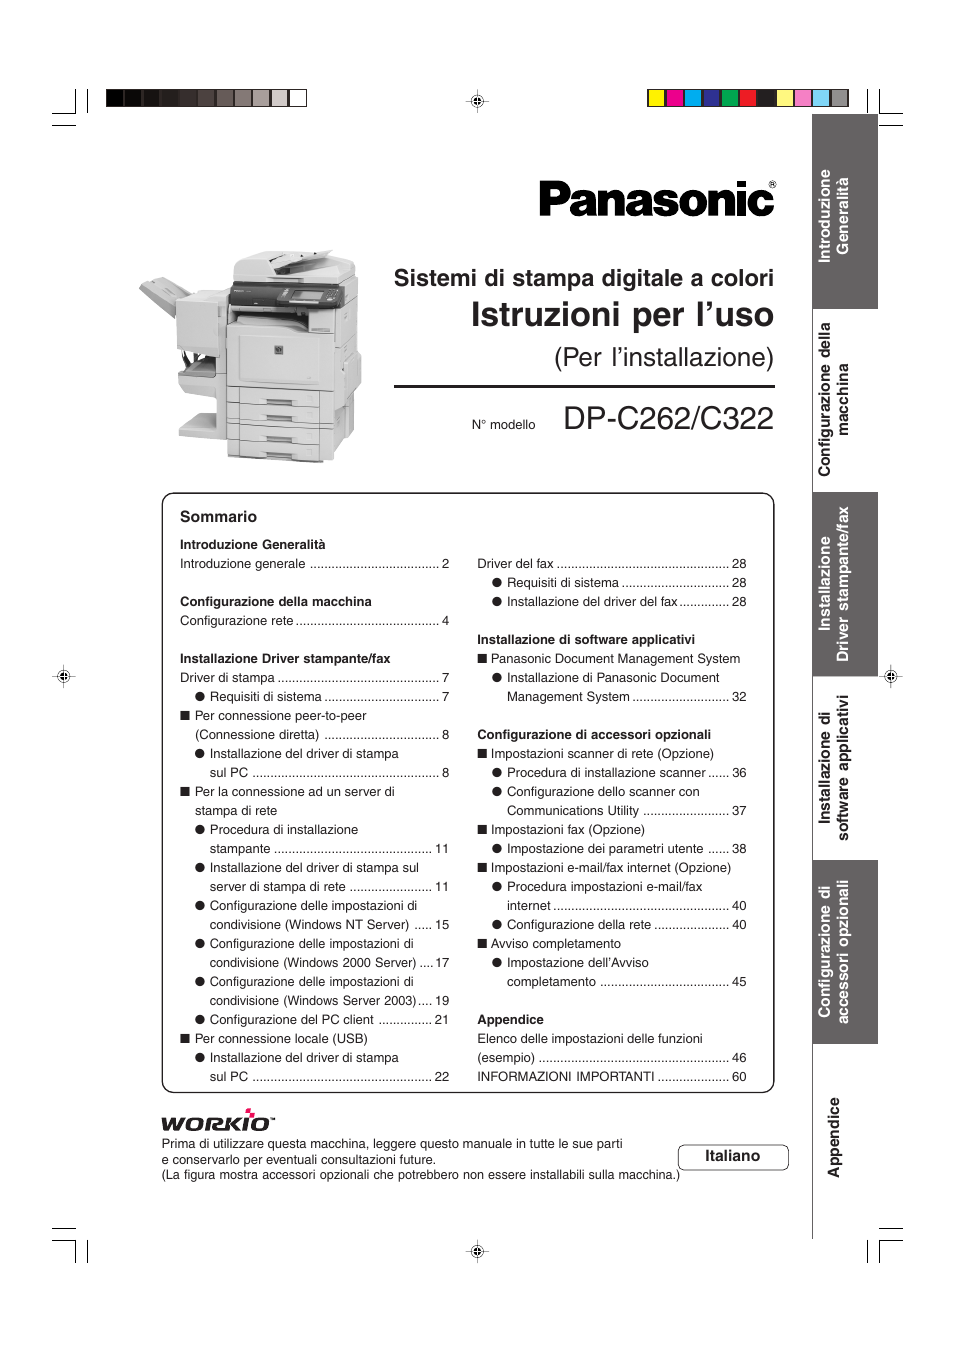 Panasonic DPC262 Manuale d'uso | Pagine: 63